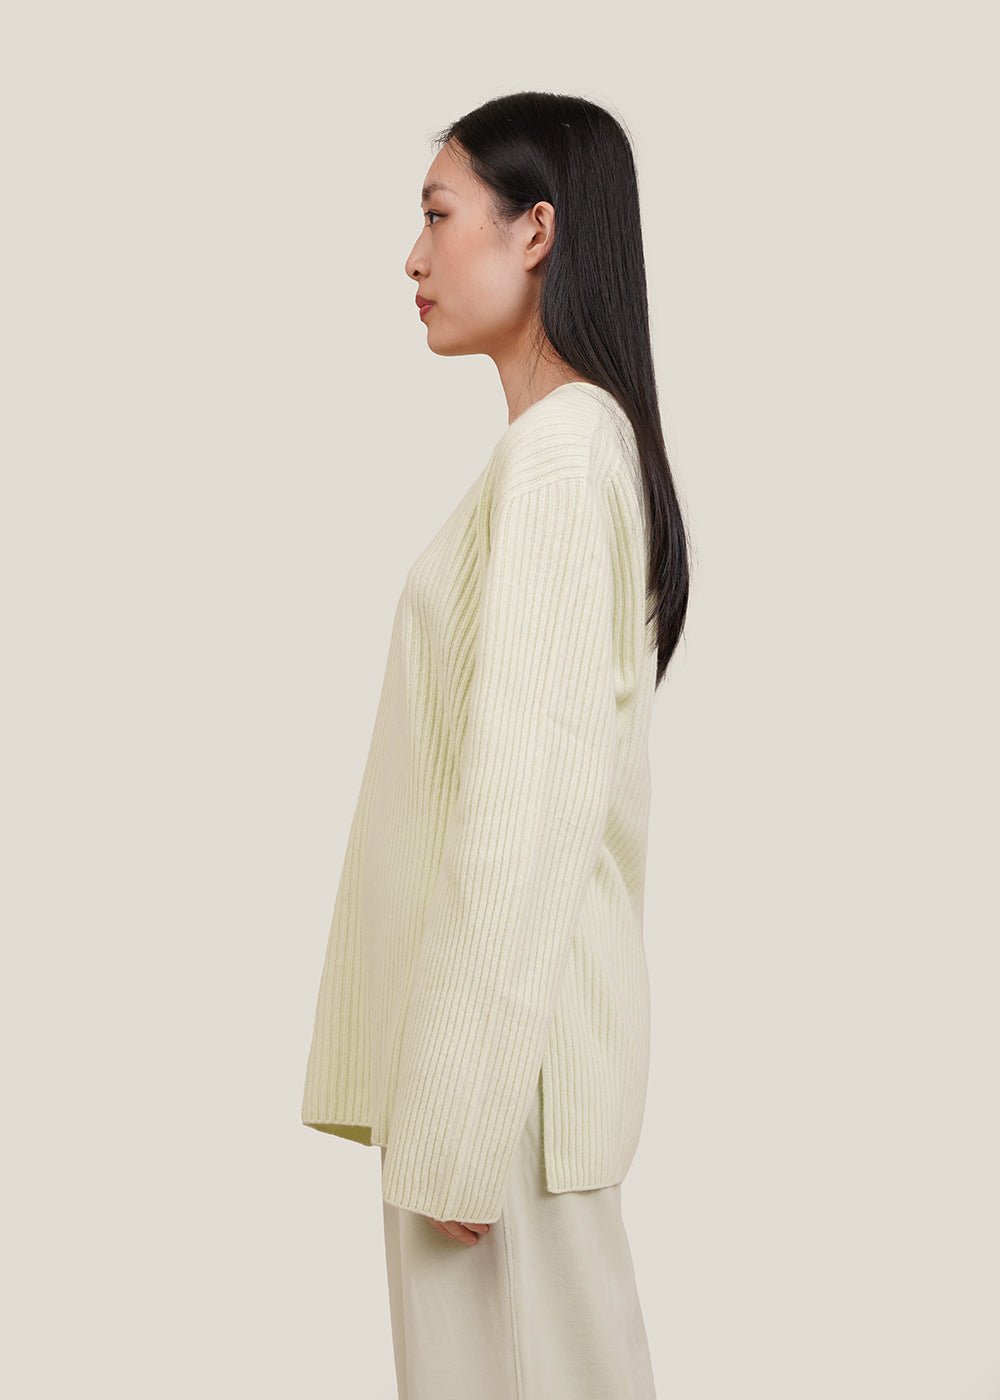 AMOMENTO Whole Garment Rib Knit Sweater - New Classics Studios Sustainable Ethical Fashion Canada